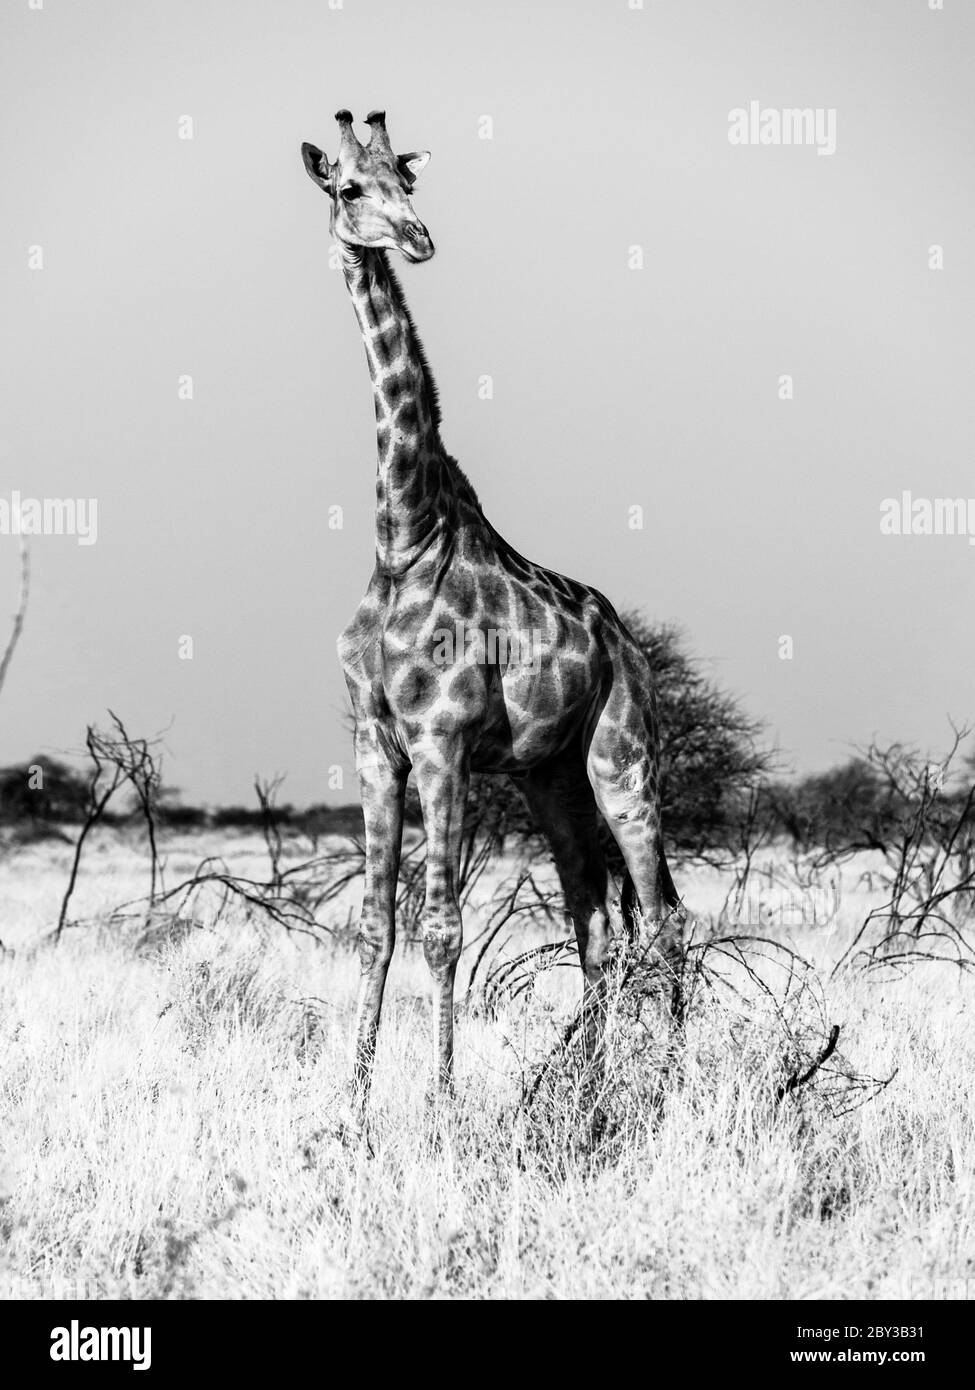 Giraffe standing in the savanna. African wildlife safari scene in Etosha National Park, Namibia, Africa. Black and white image. Stock Photo